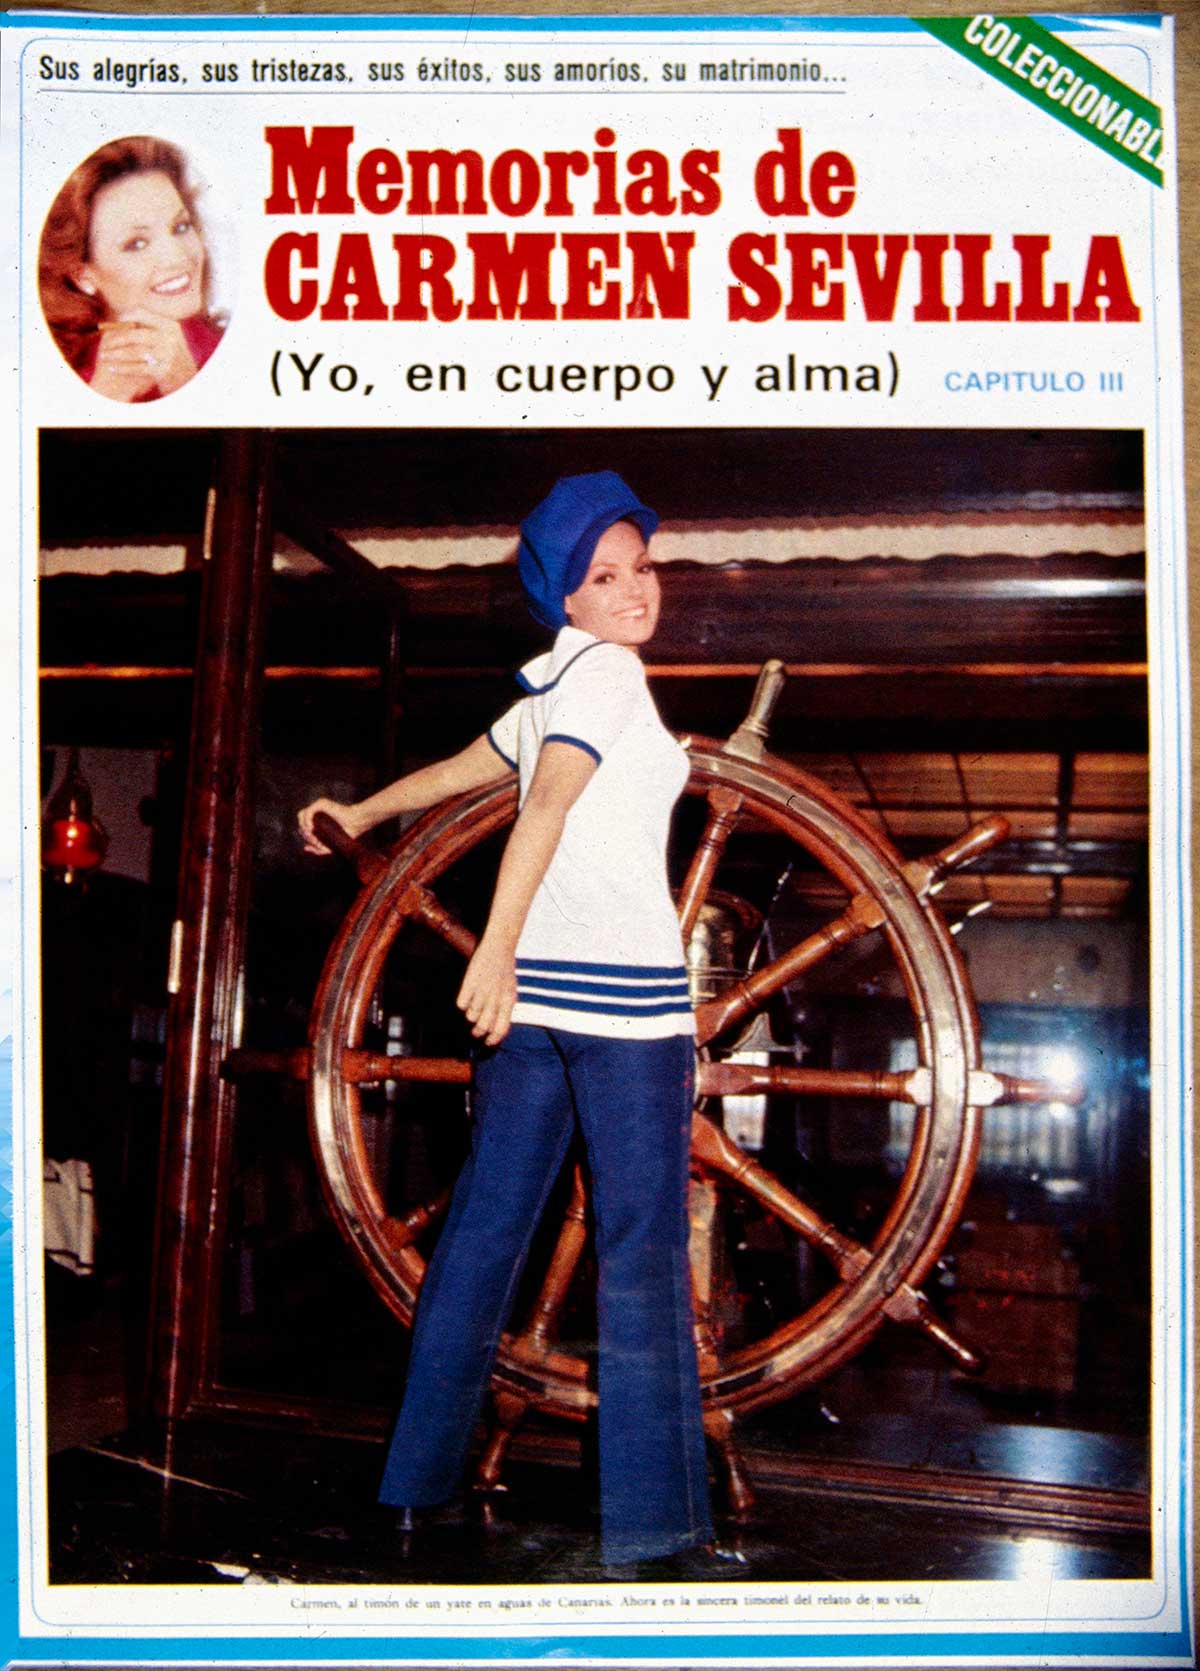 La vida de Carmen Sevilla, contada por ella misma